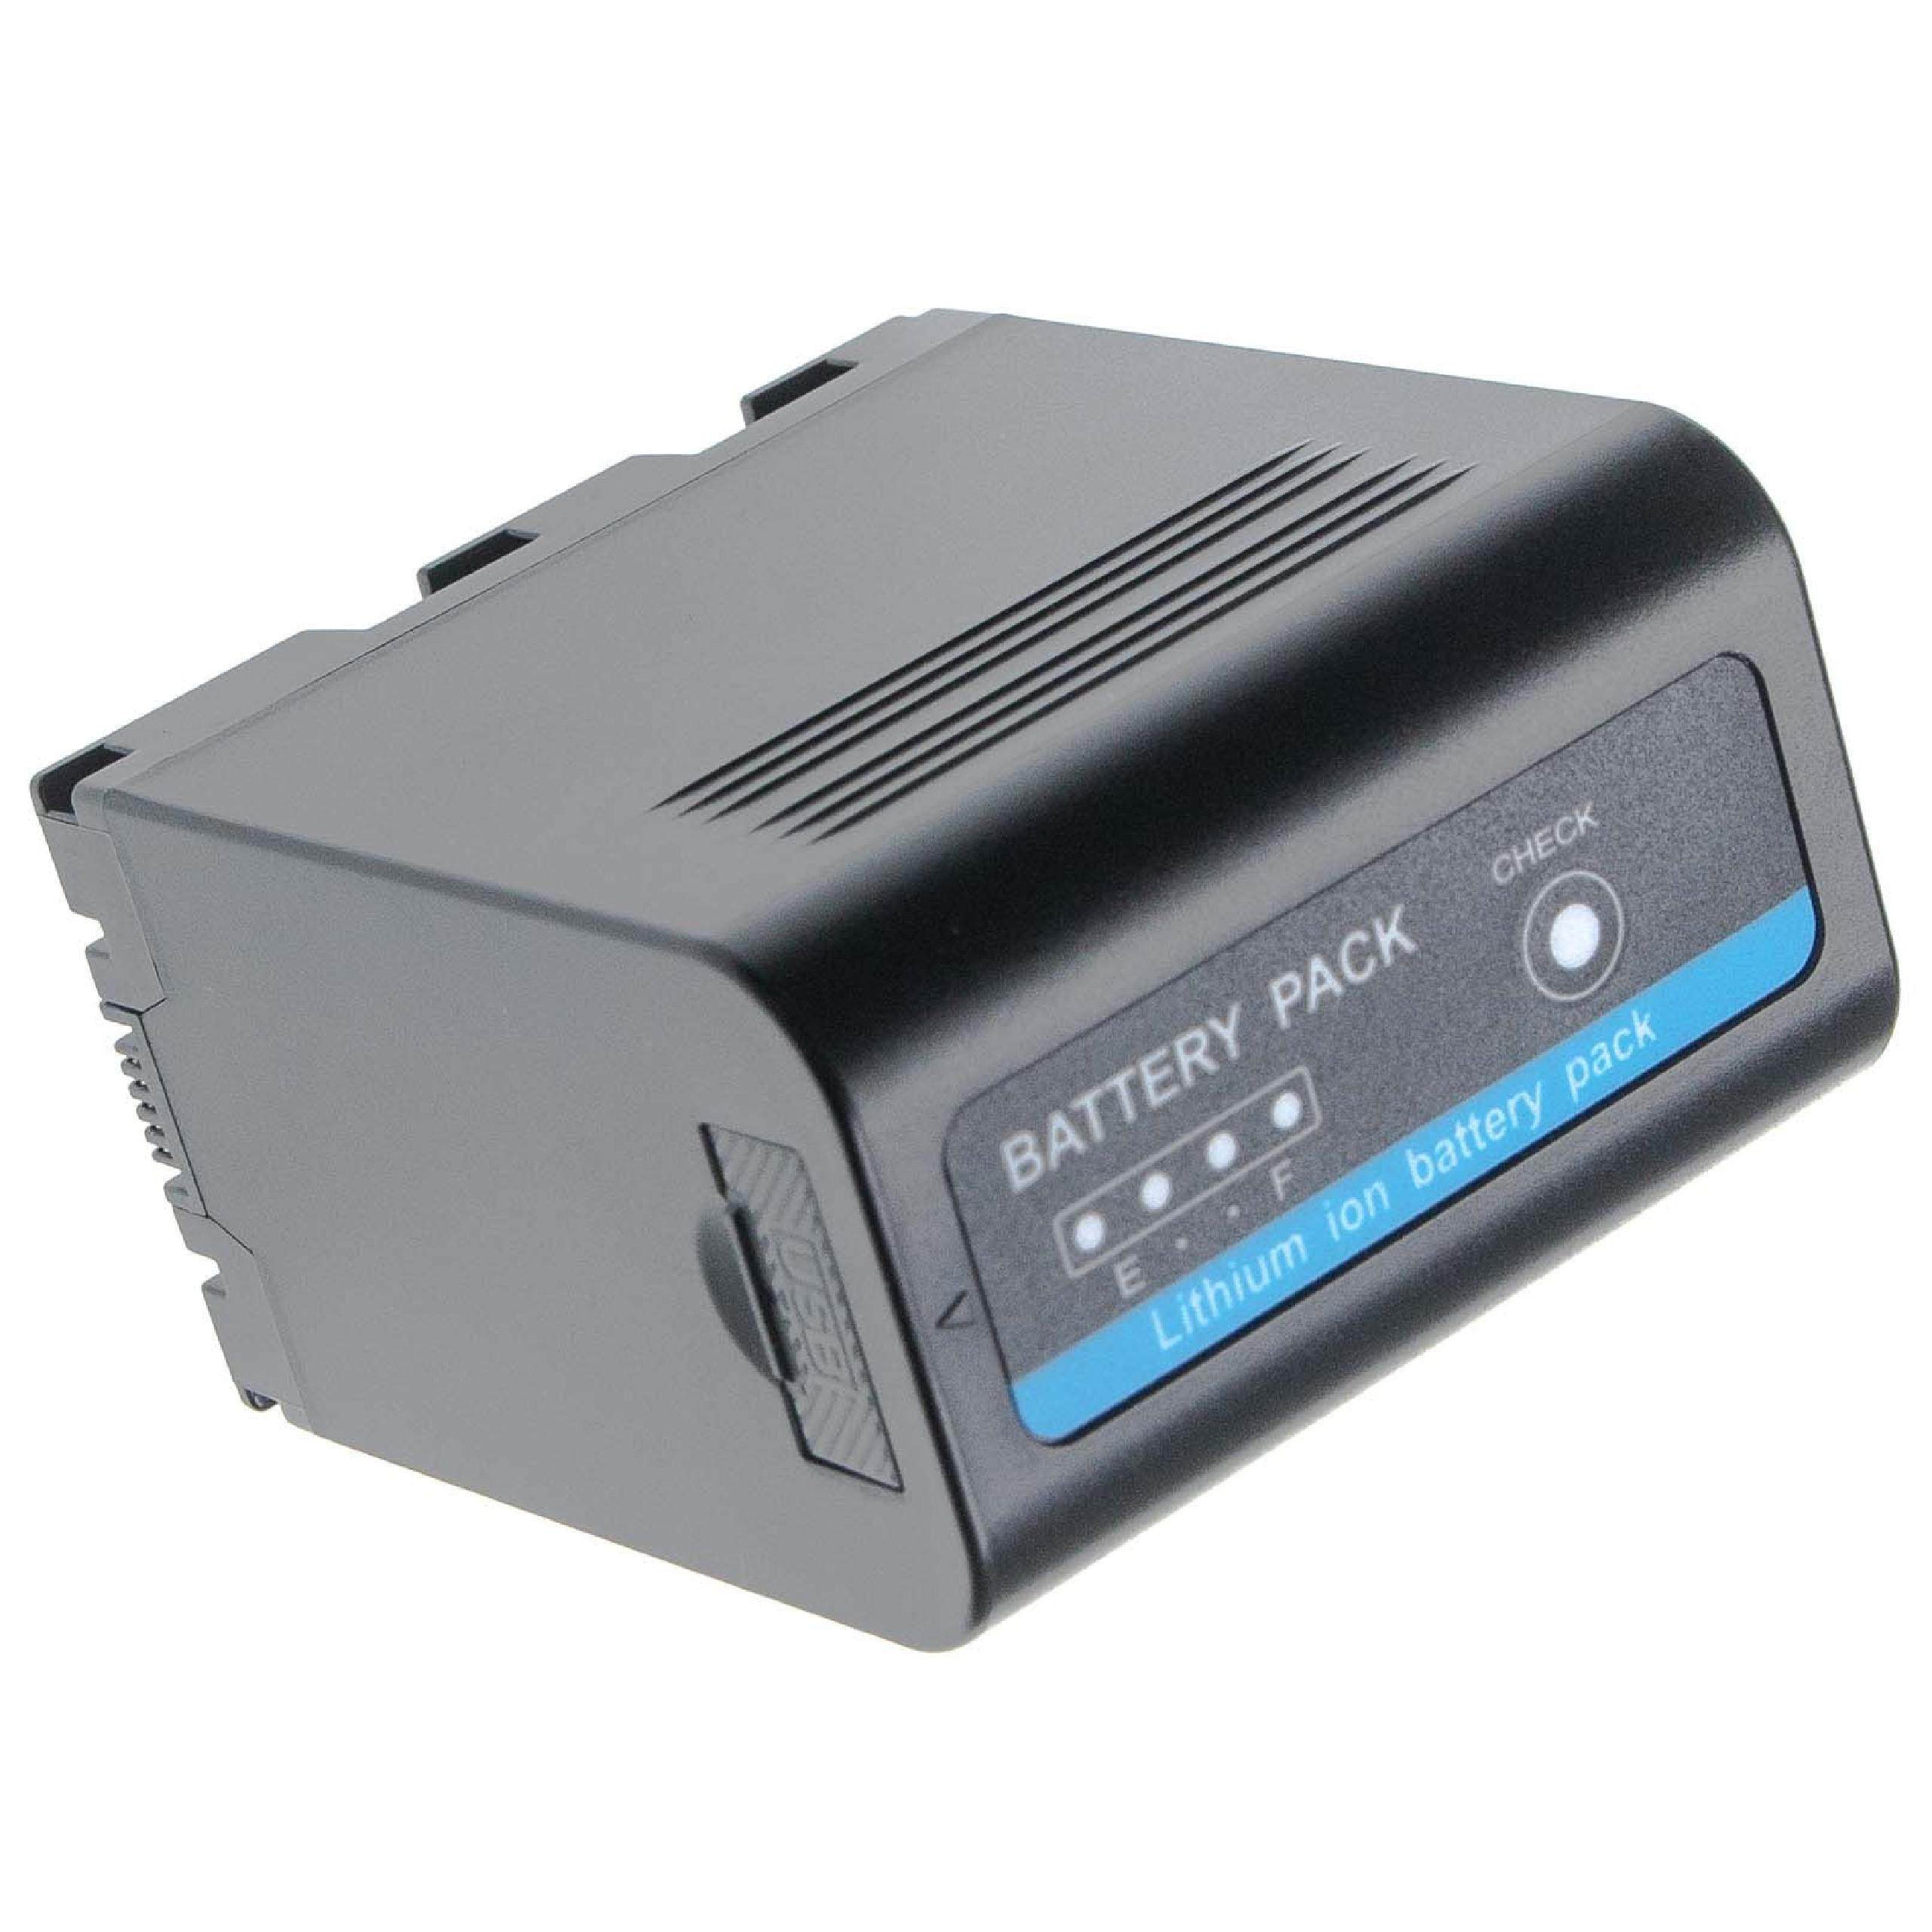 Batteria per videocamera sostituisce JVC SSL-50, SSL-70 JVC - 7800mAh 7,4V Li-Ion con presa USB